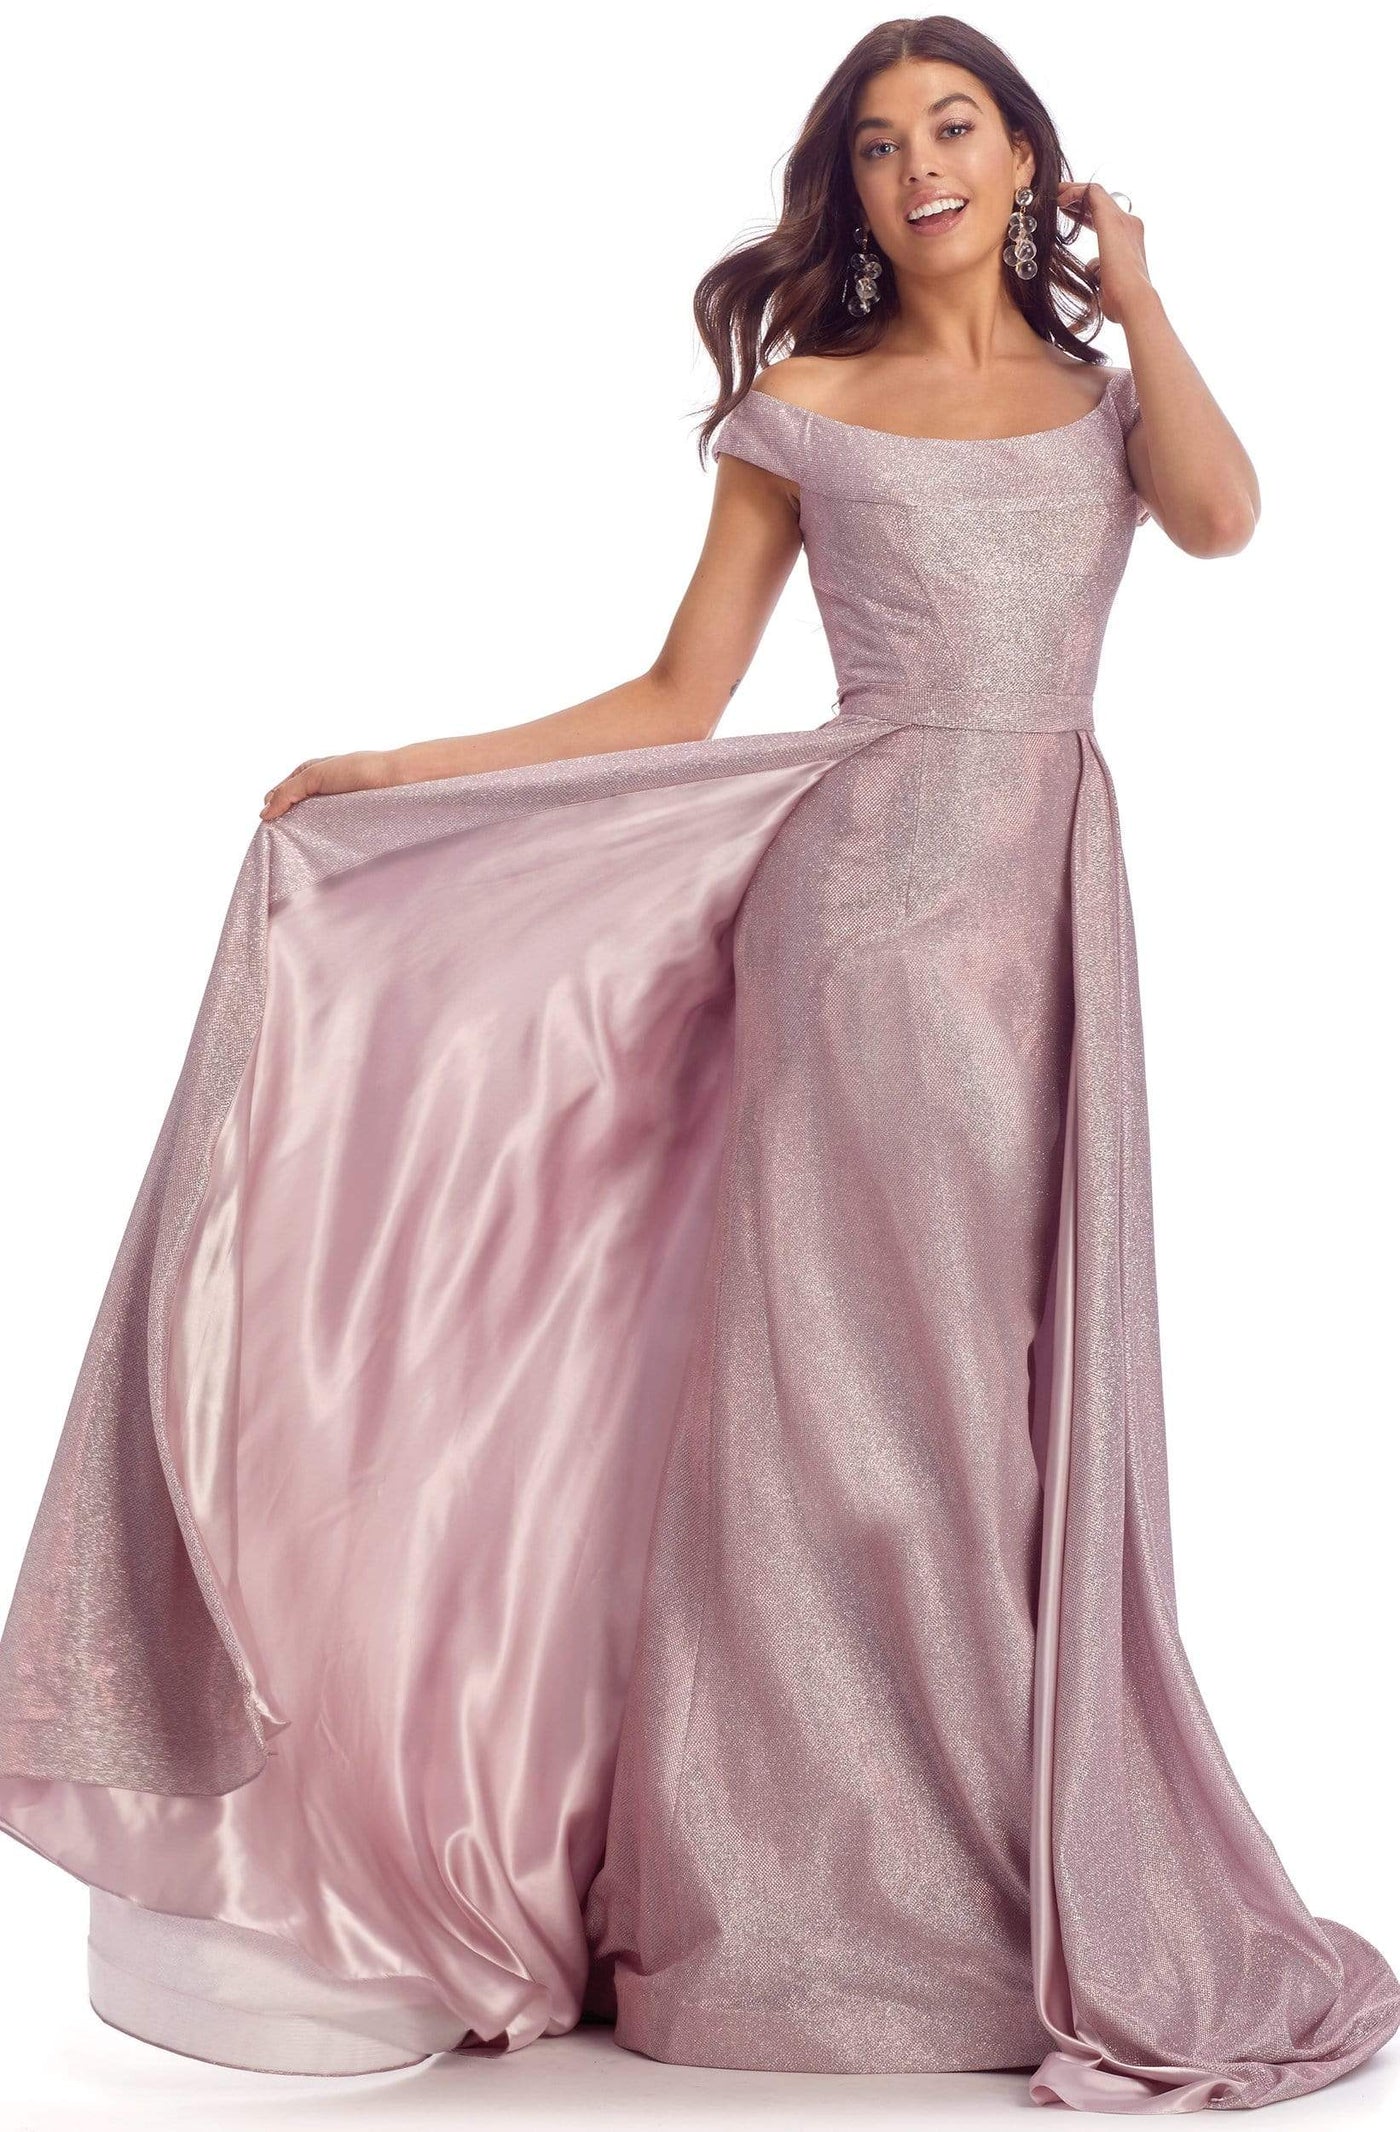 Clarisse - 8049 Off Shoulder Metallic Glitter Overskirt Gown Evening Dresses 0 / Light Pink